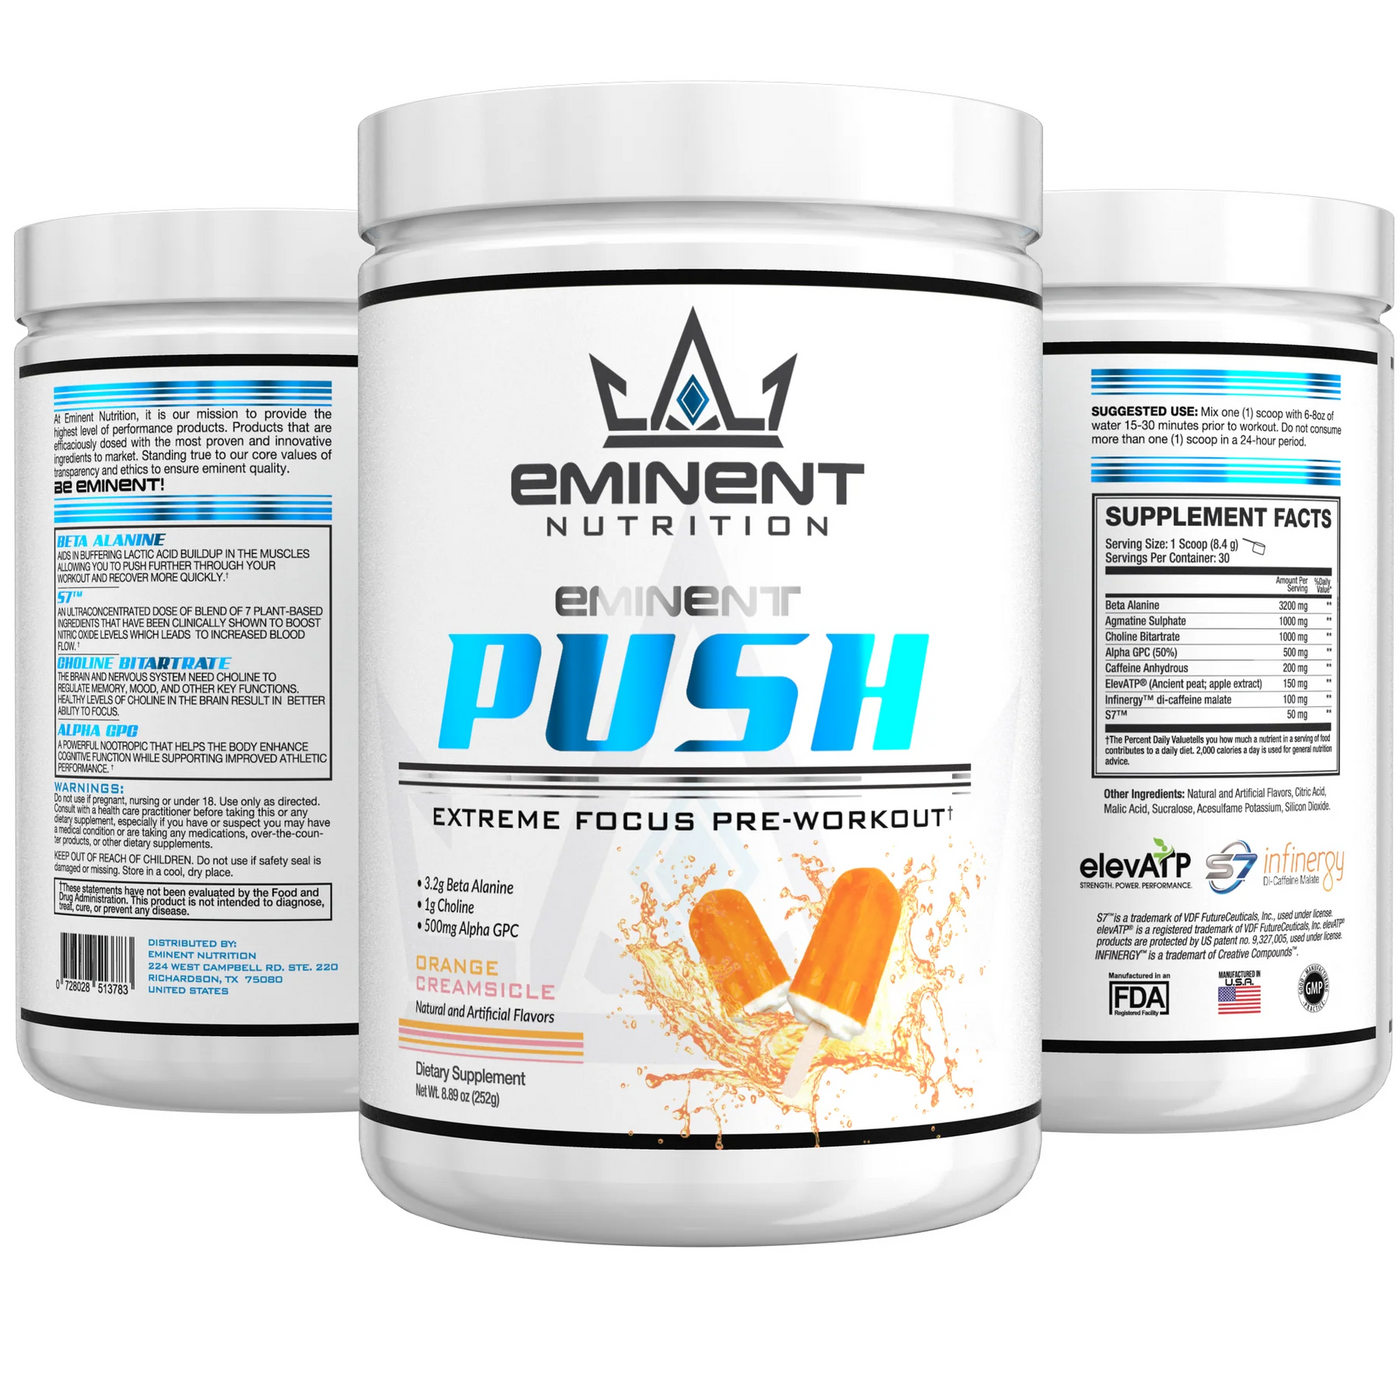 Eminent Nutrition | Eminent Push Preworkout